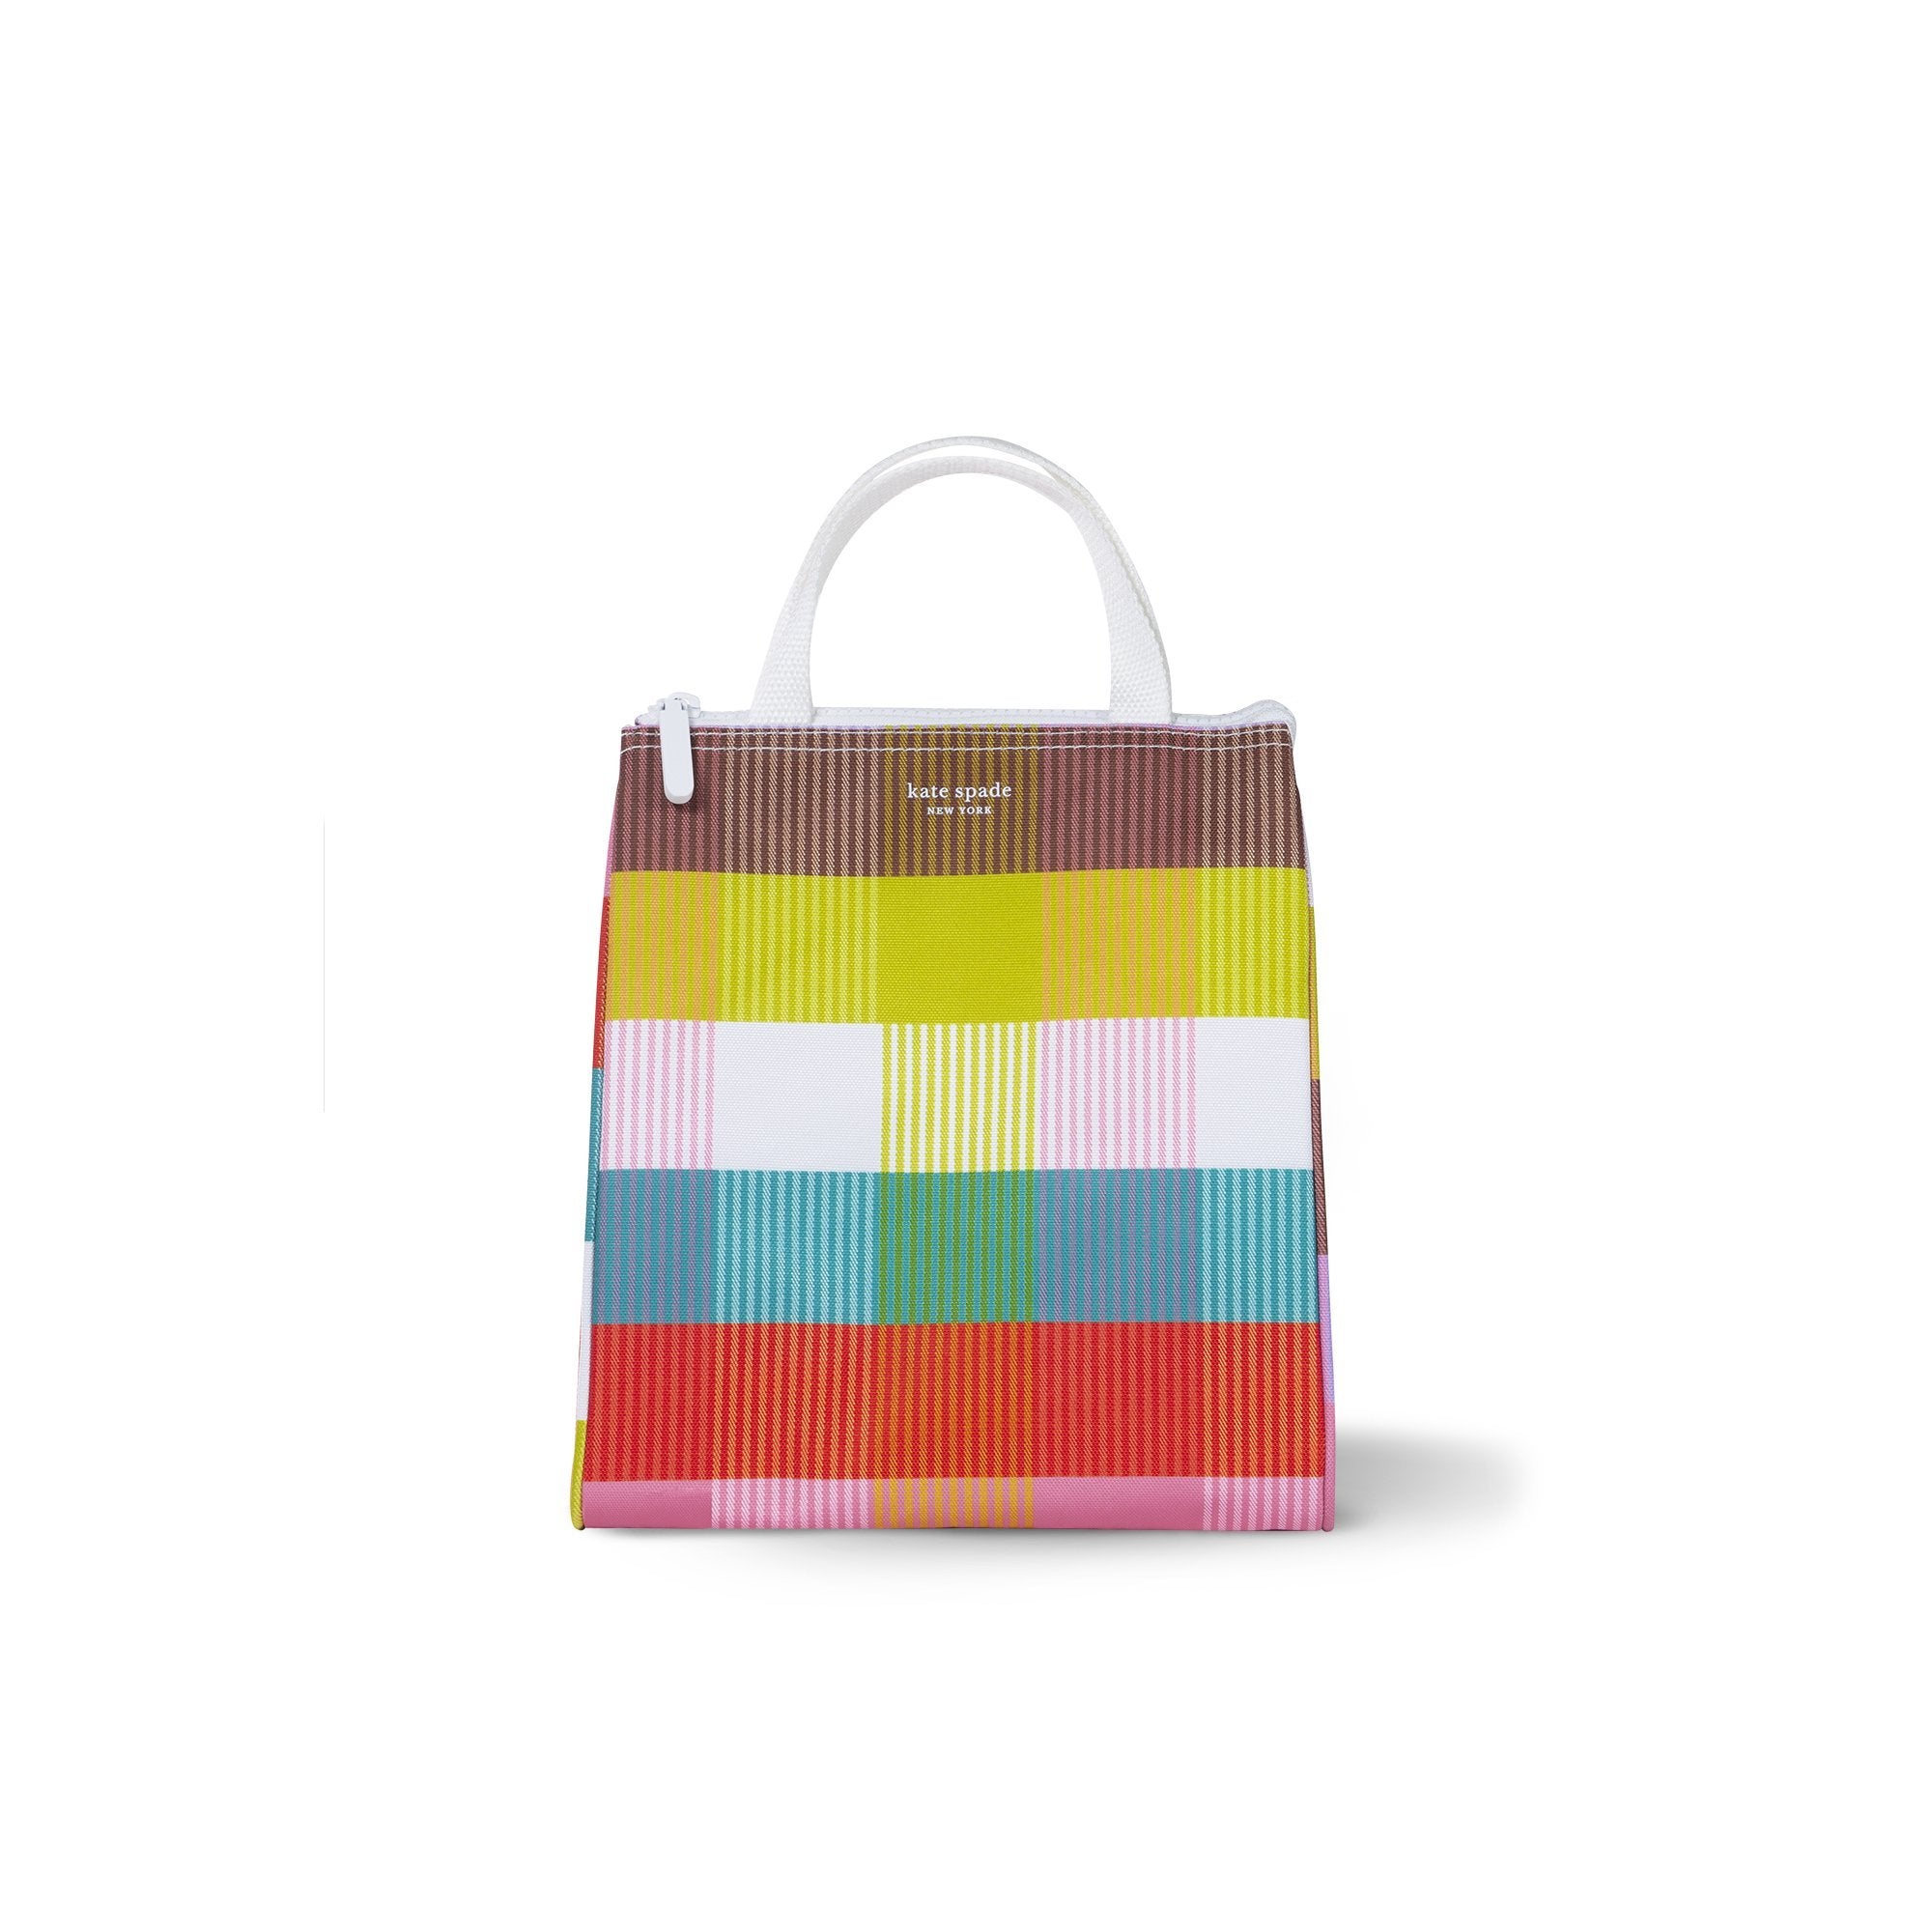 kate spade new york-spade lunch bag, rainbow plaid - Lifeguard Press